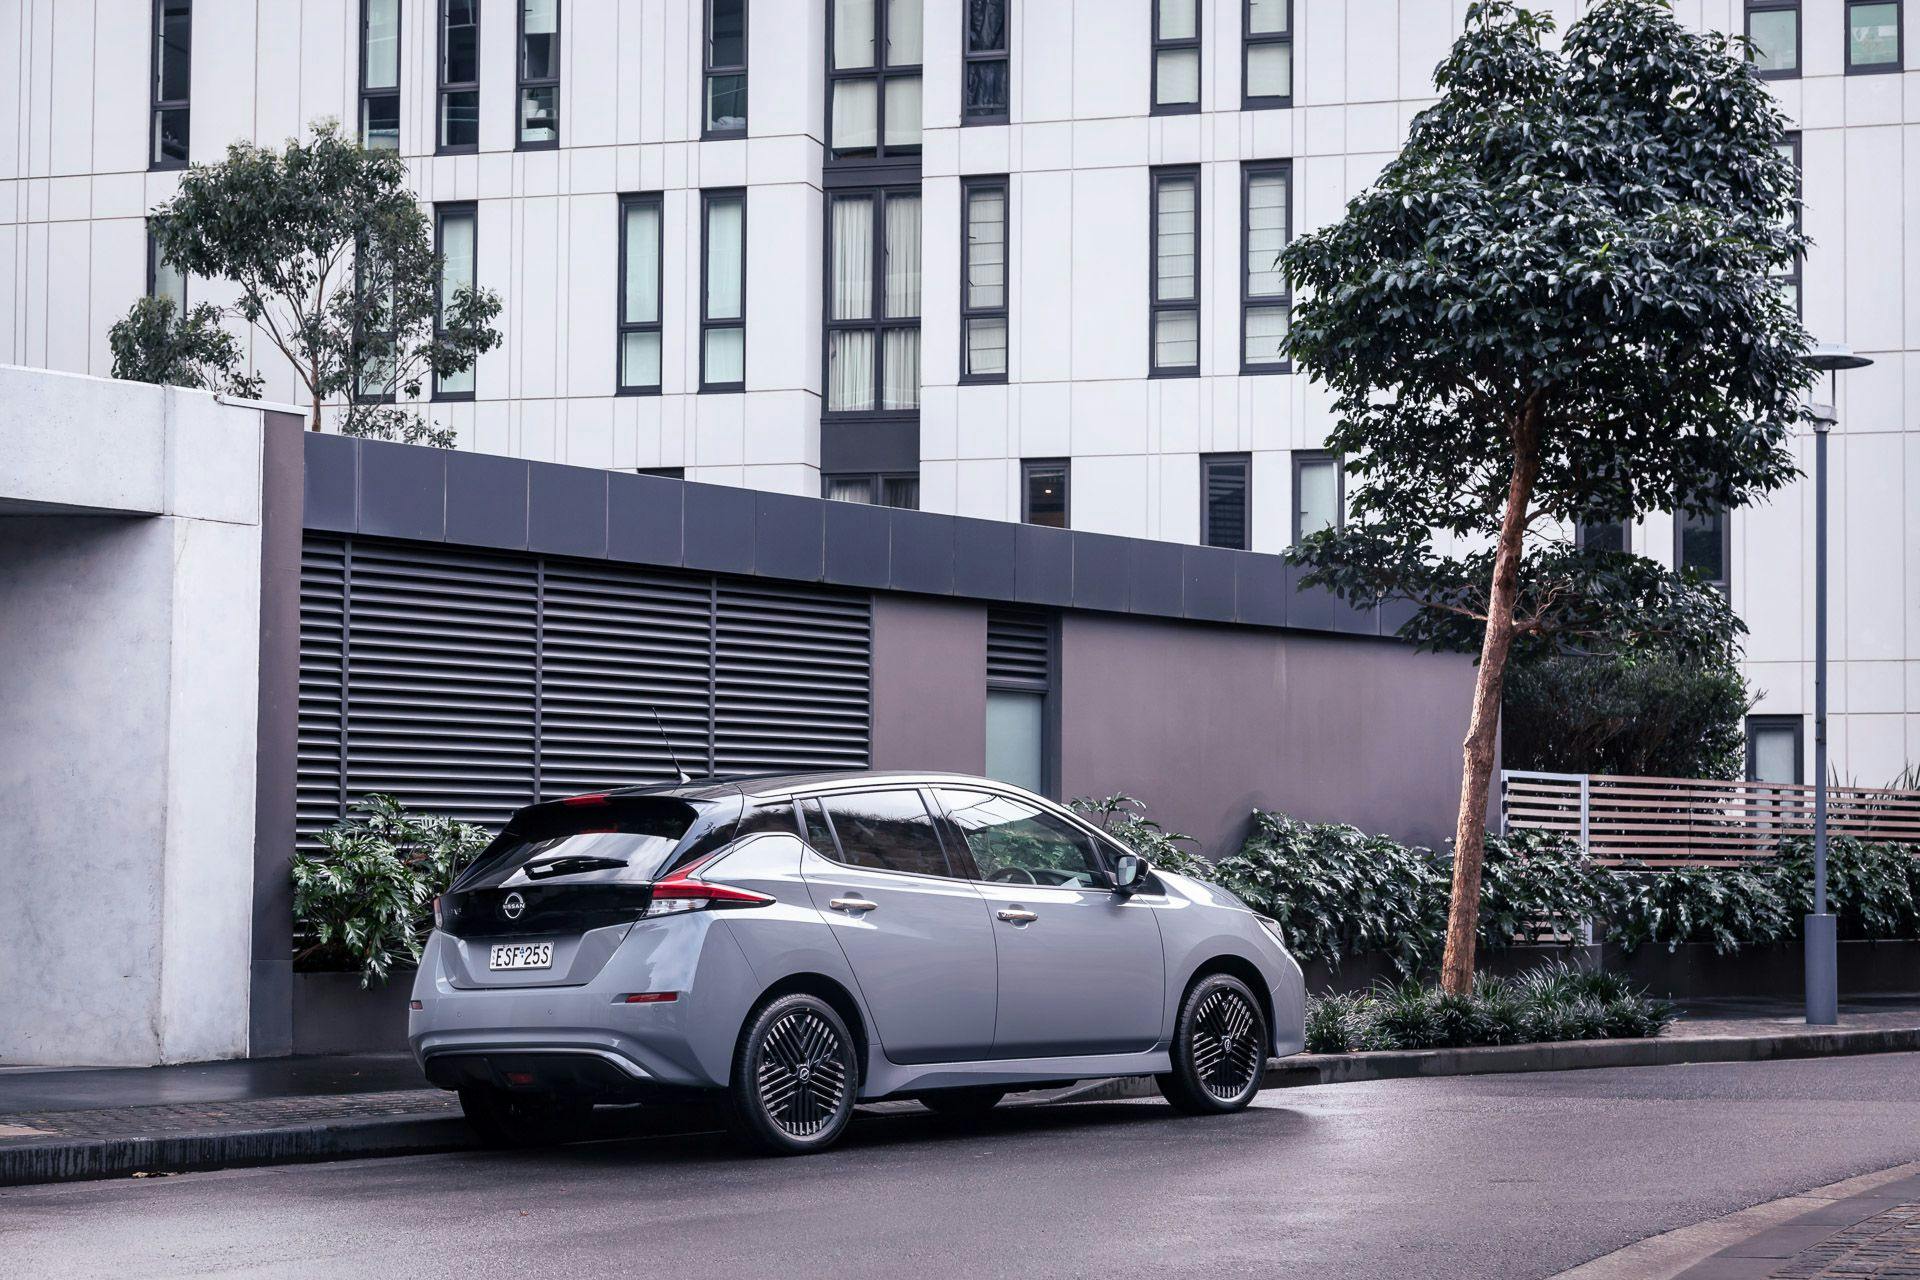 2023 Nissan Leaf parked in urban street